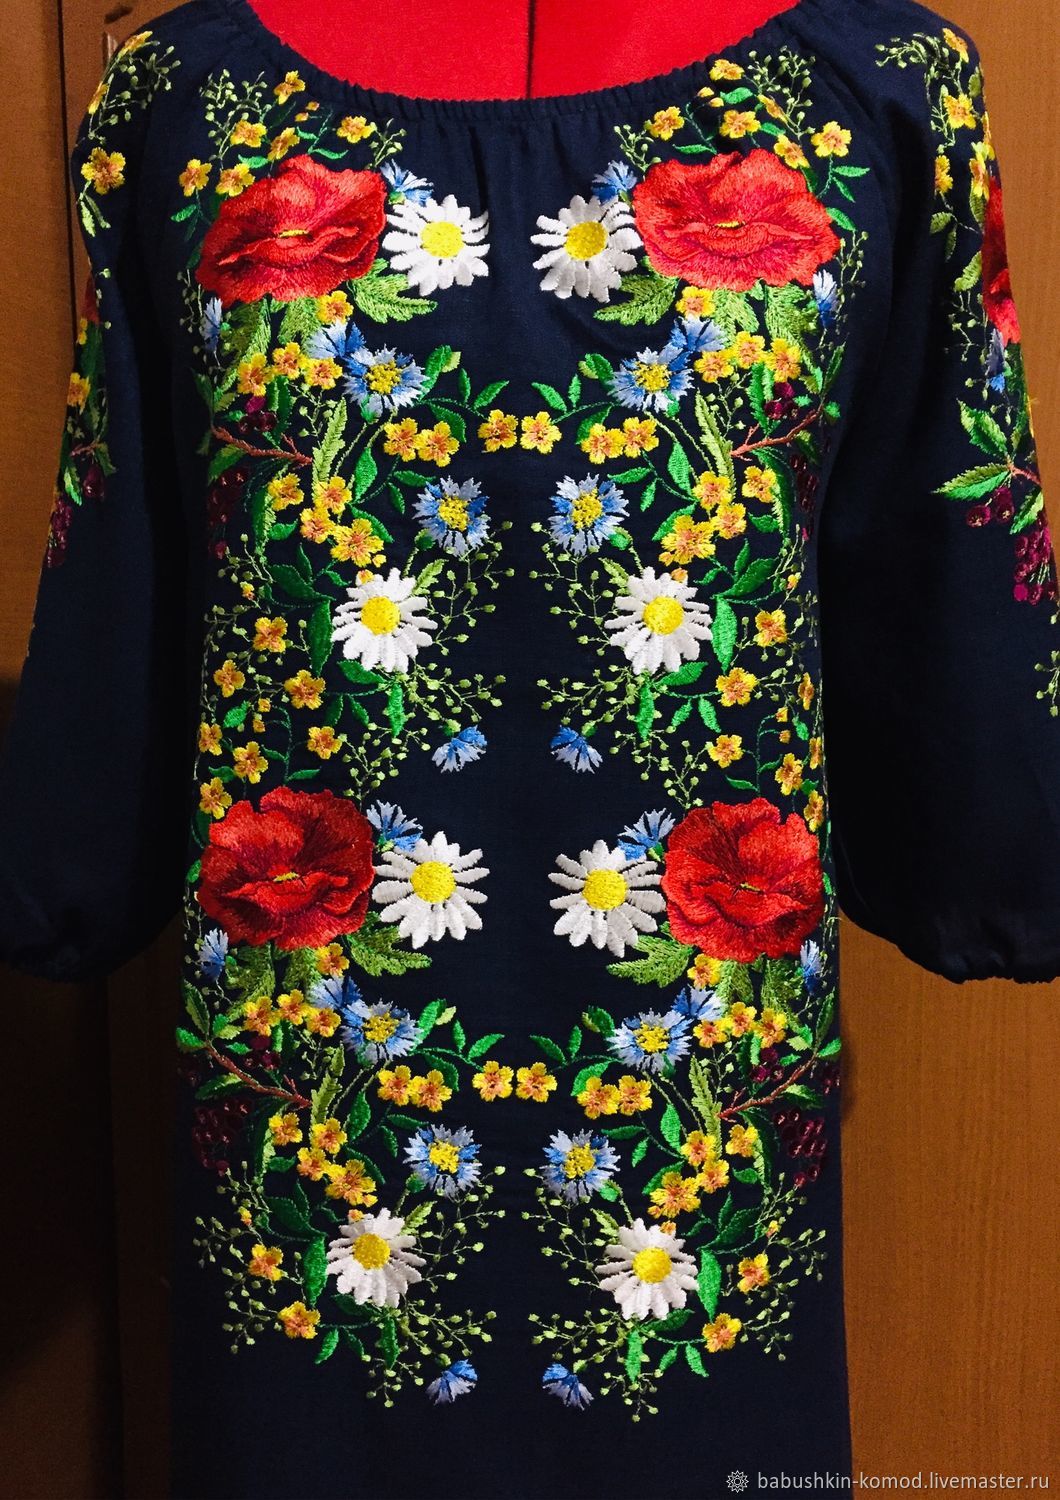 Embroidered dress 'Night garden' GP3-144, Dresses, Temryuk,  Фото №1